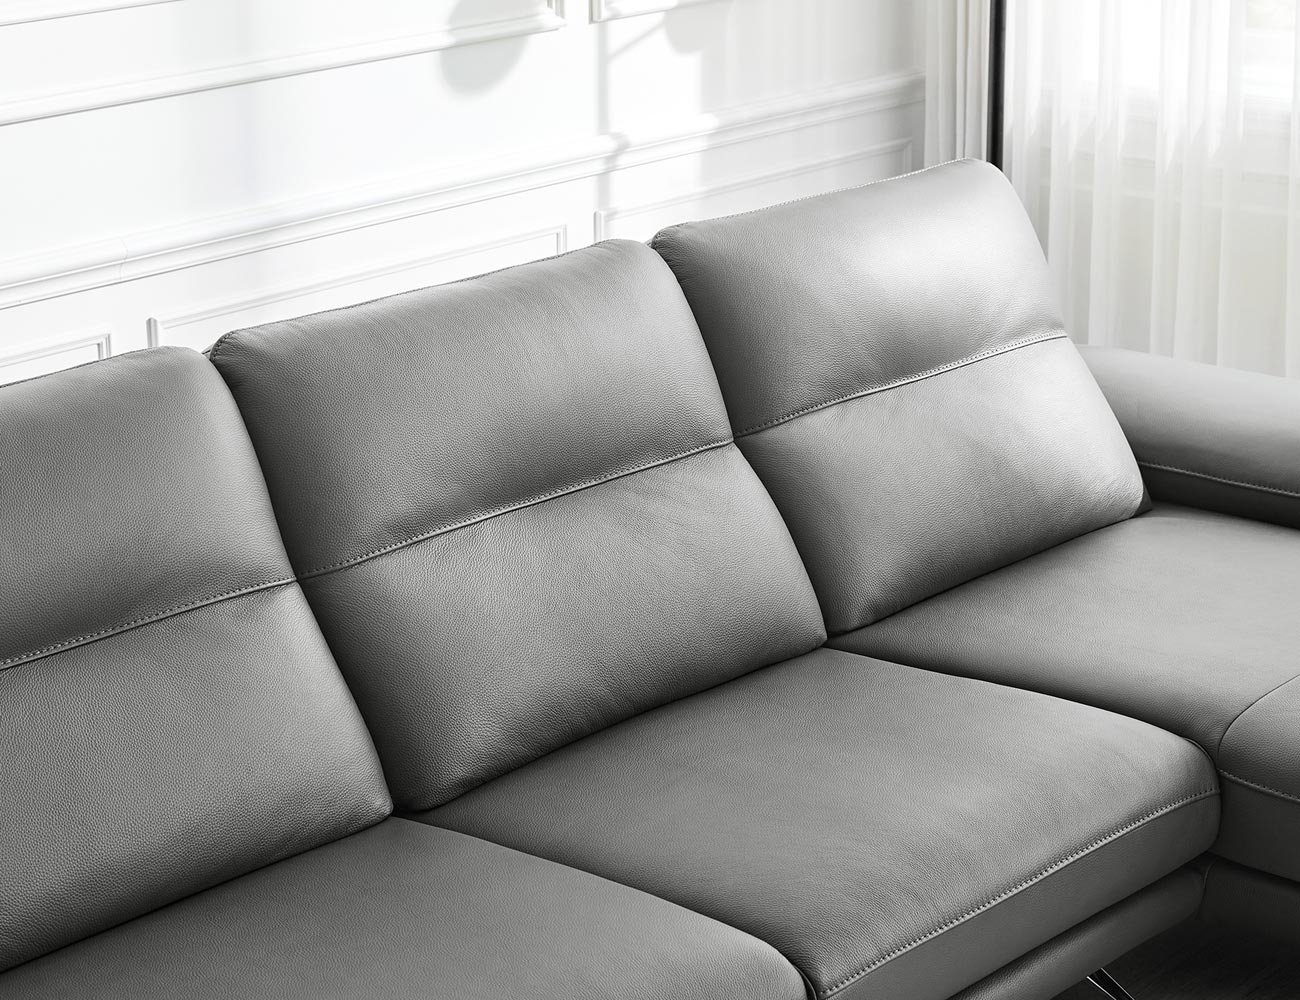 [healing sofa] 엘리쉬 3.5인 카우치형 기능성 슈렁큰 천연면피 소가죽 소파